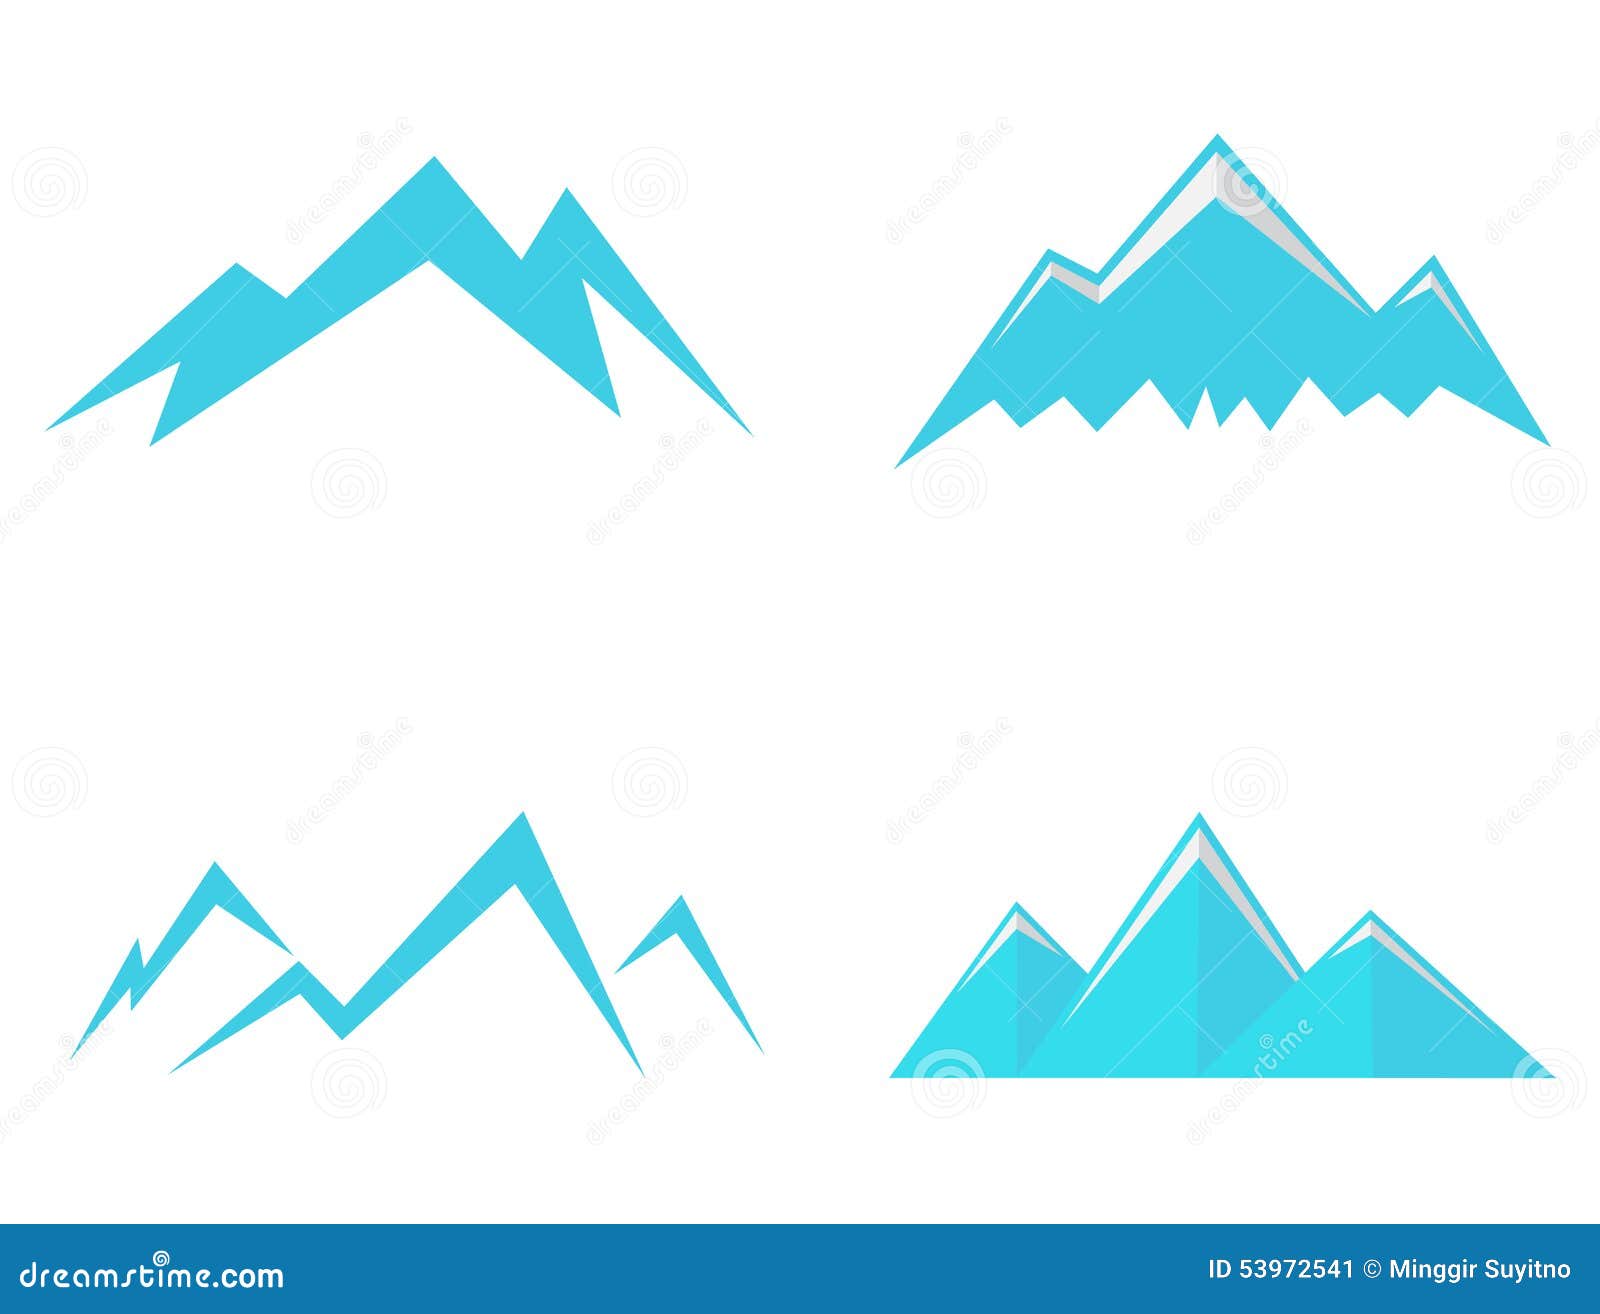 Mountains Icons stock vector. Illustration of peak, design - 53972541